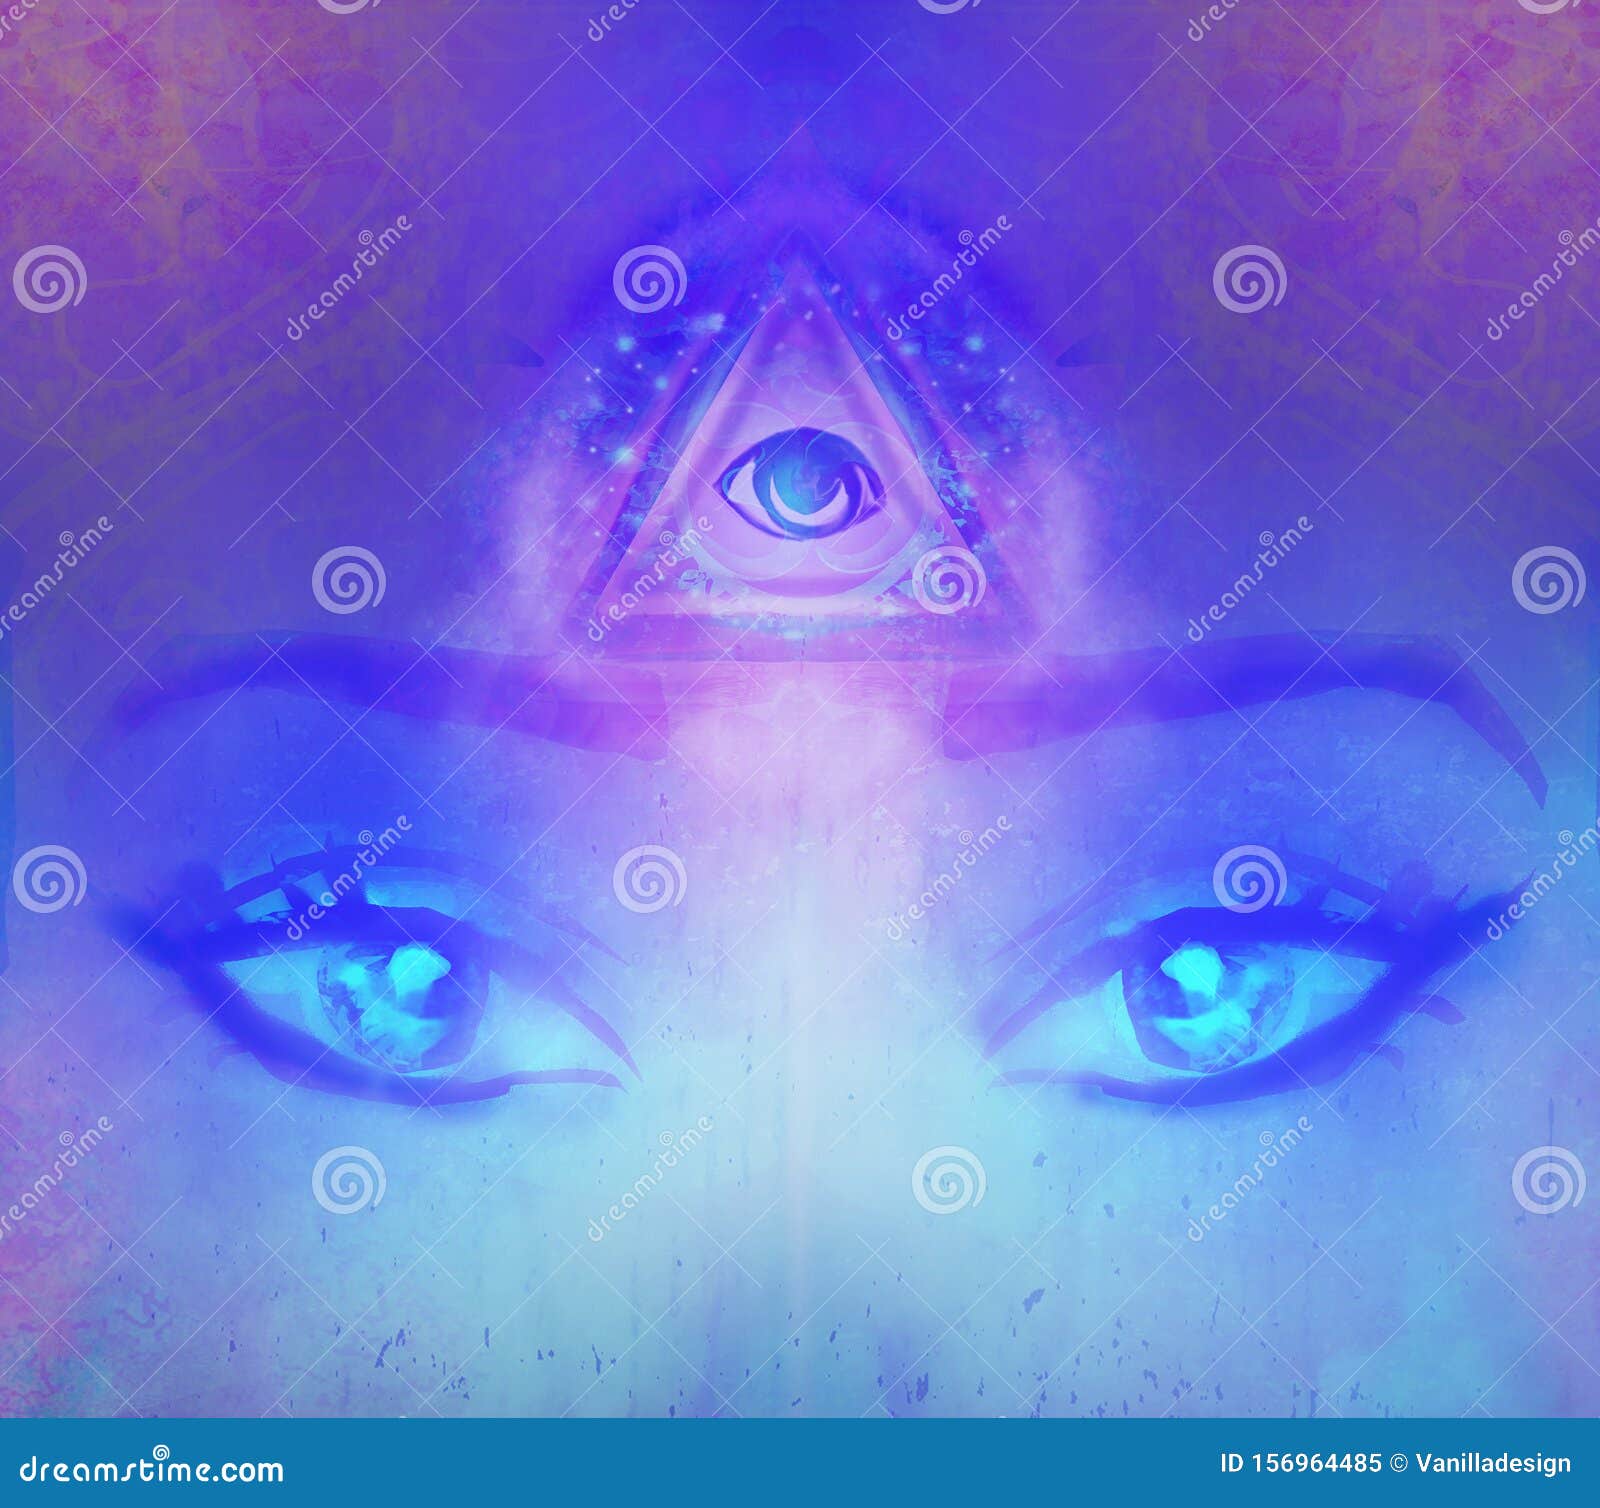 woman with third eye, psychic supernatural senses